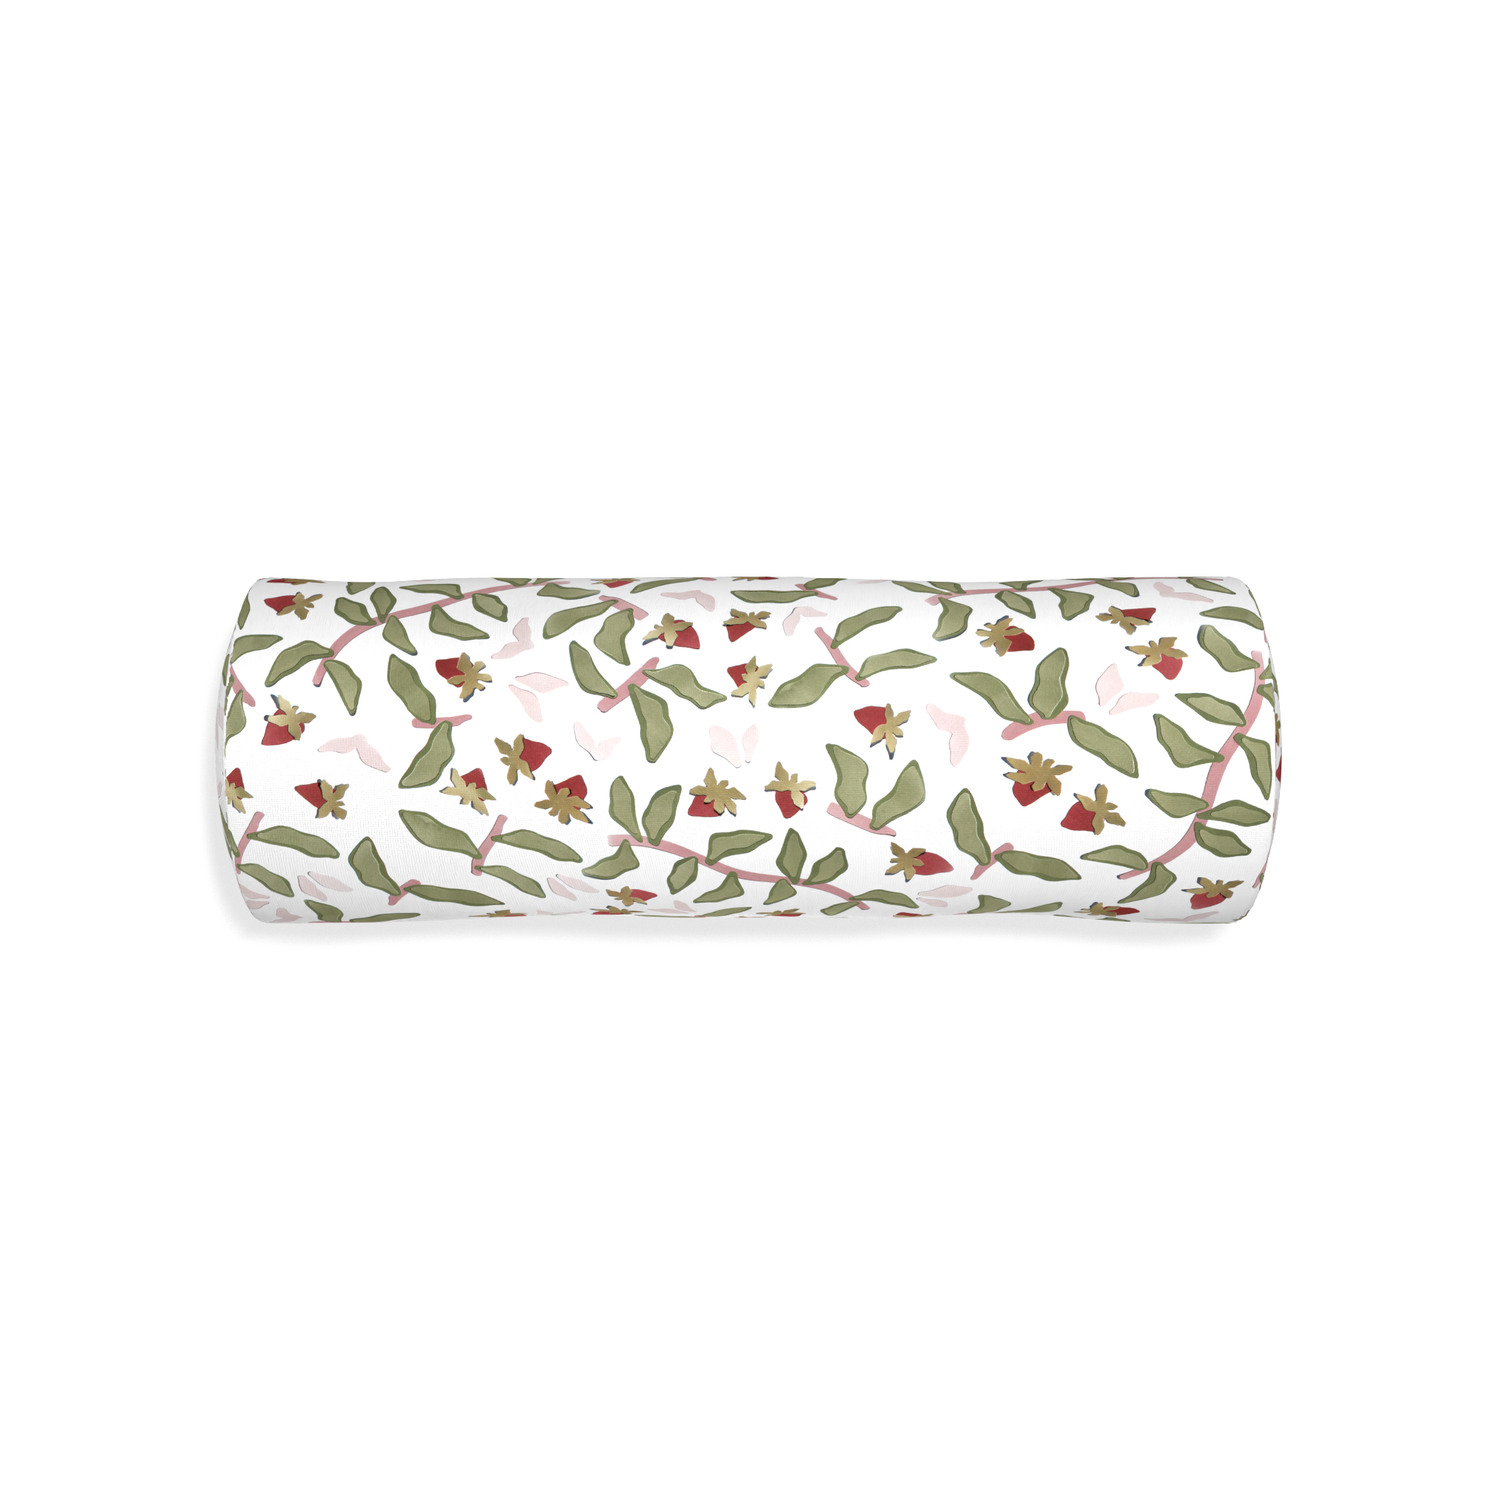 Bolster nellie custom strawberry & botanicalpillow with none on white background